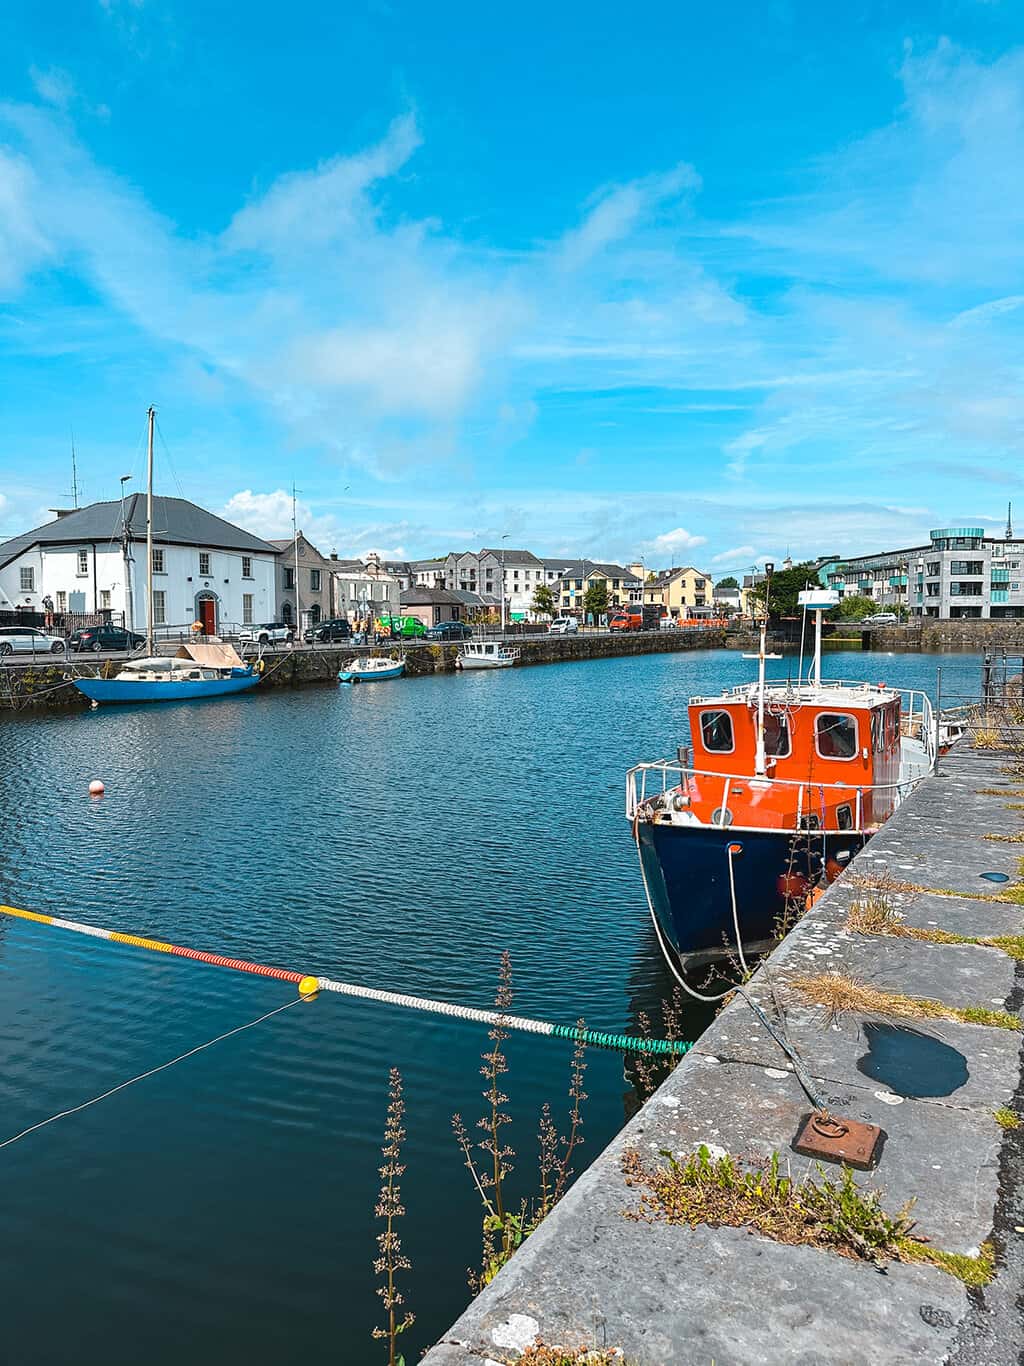 Galway Bay and Harbor Ireland
